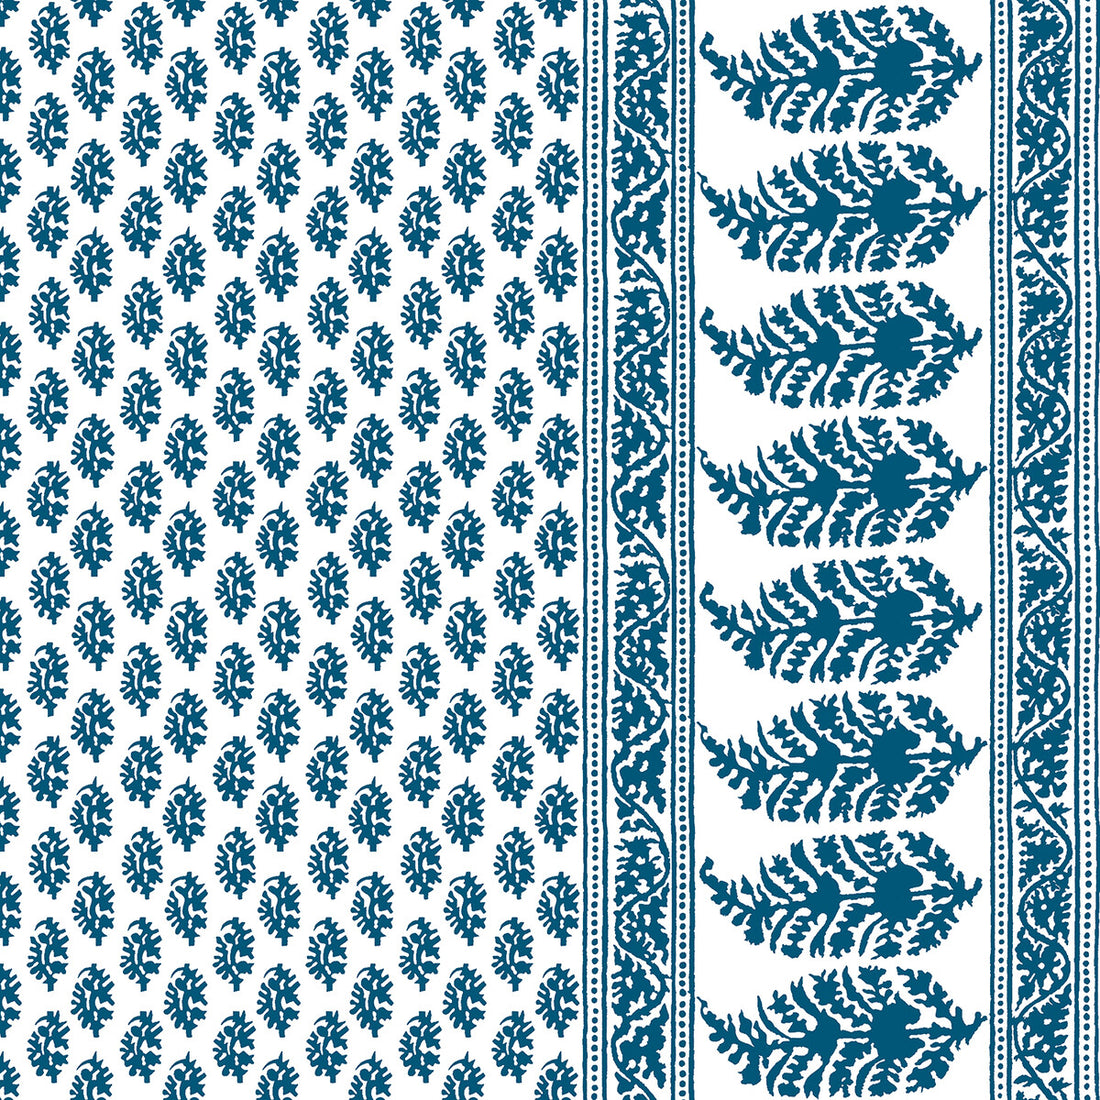 Aravaquita fabric in azul color - pattern LCT1028.002.0 - by Gaston y Daniela in the Lorenzo Castillo V collection